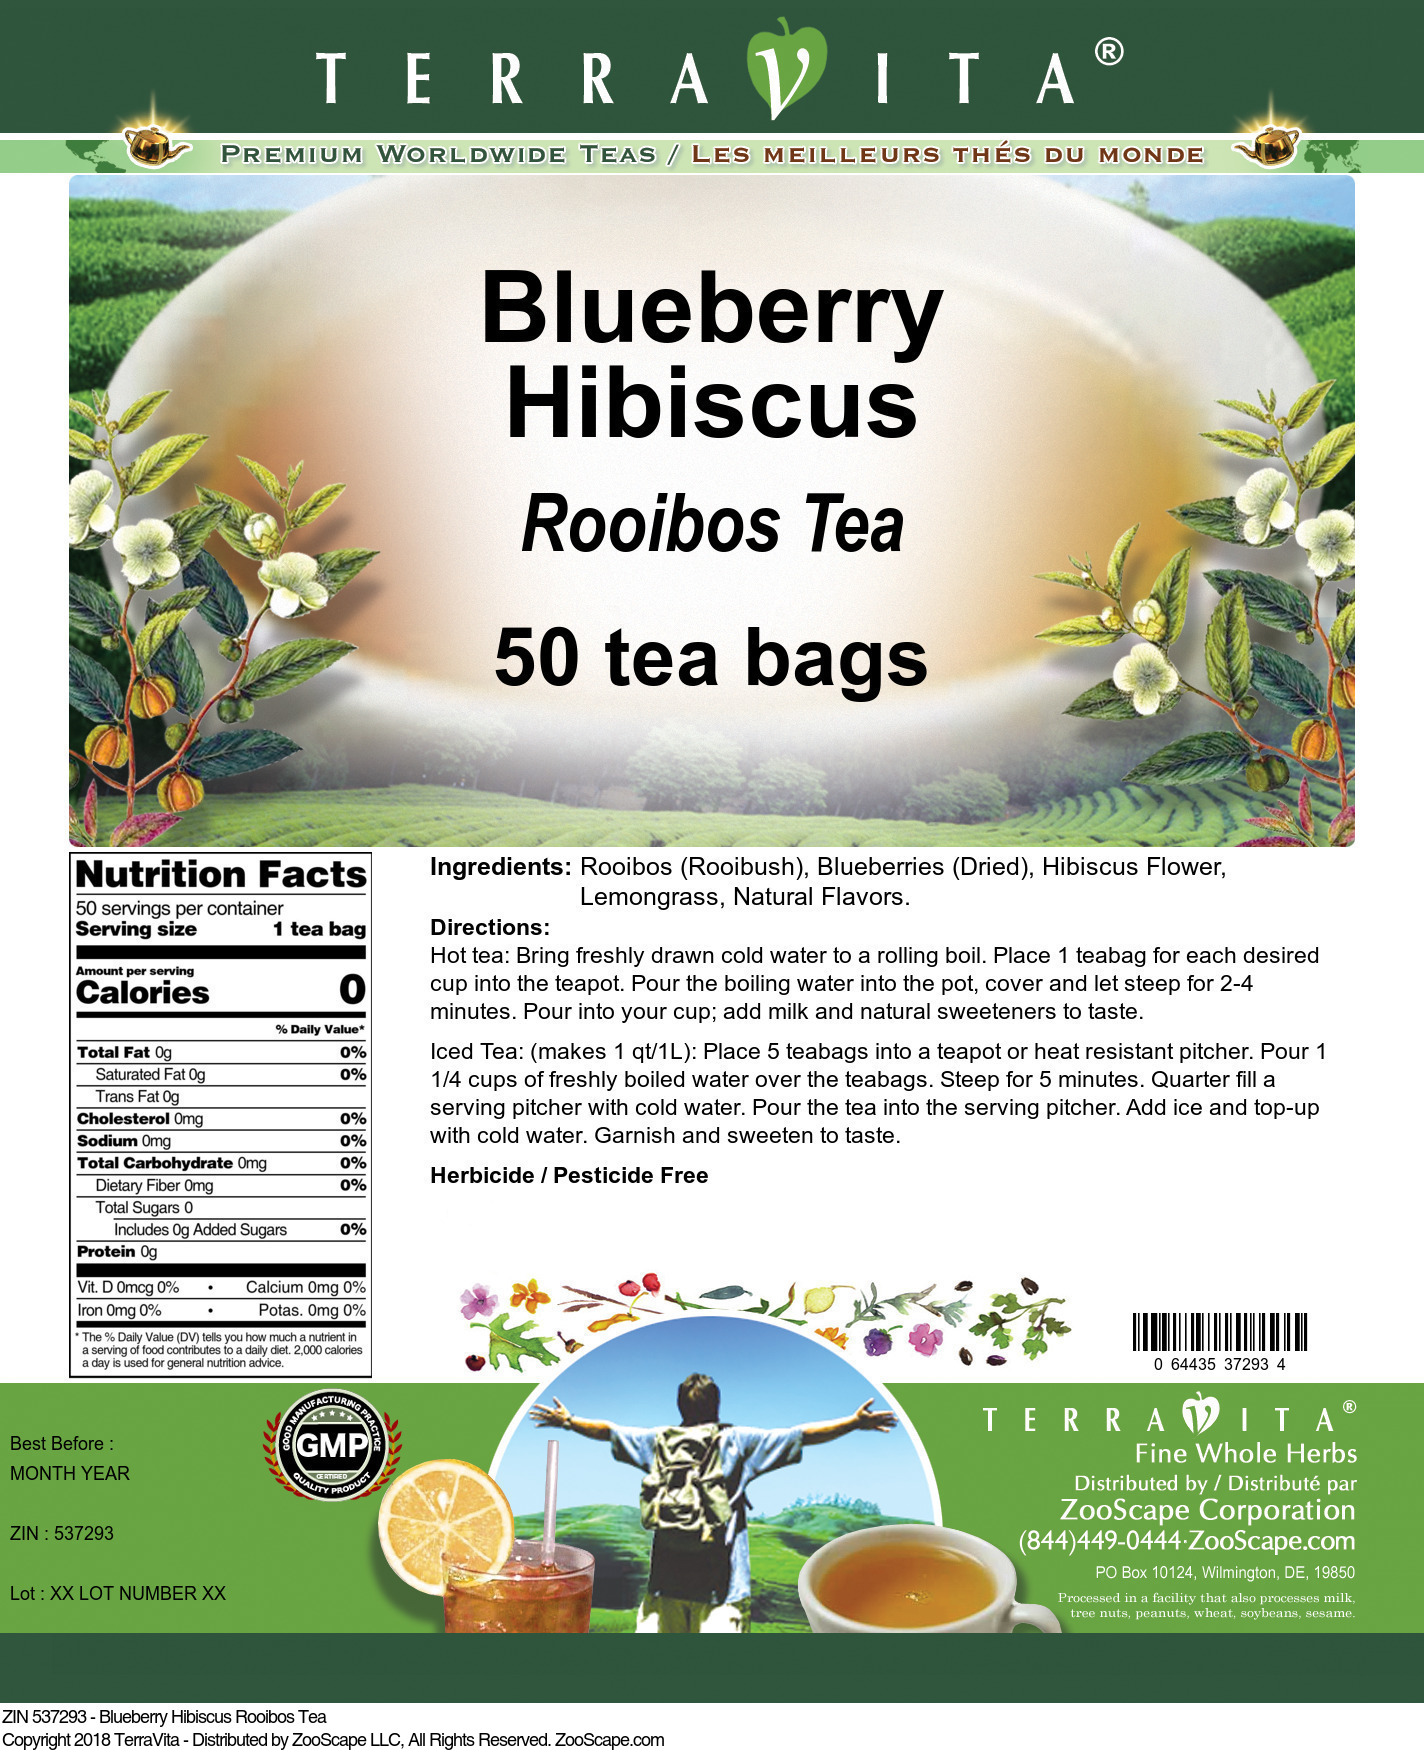 Blueberry Hibiscus Rooibos Tea - Label